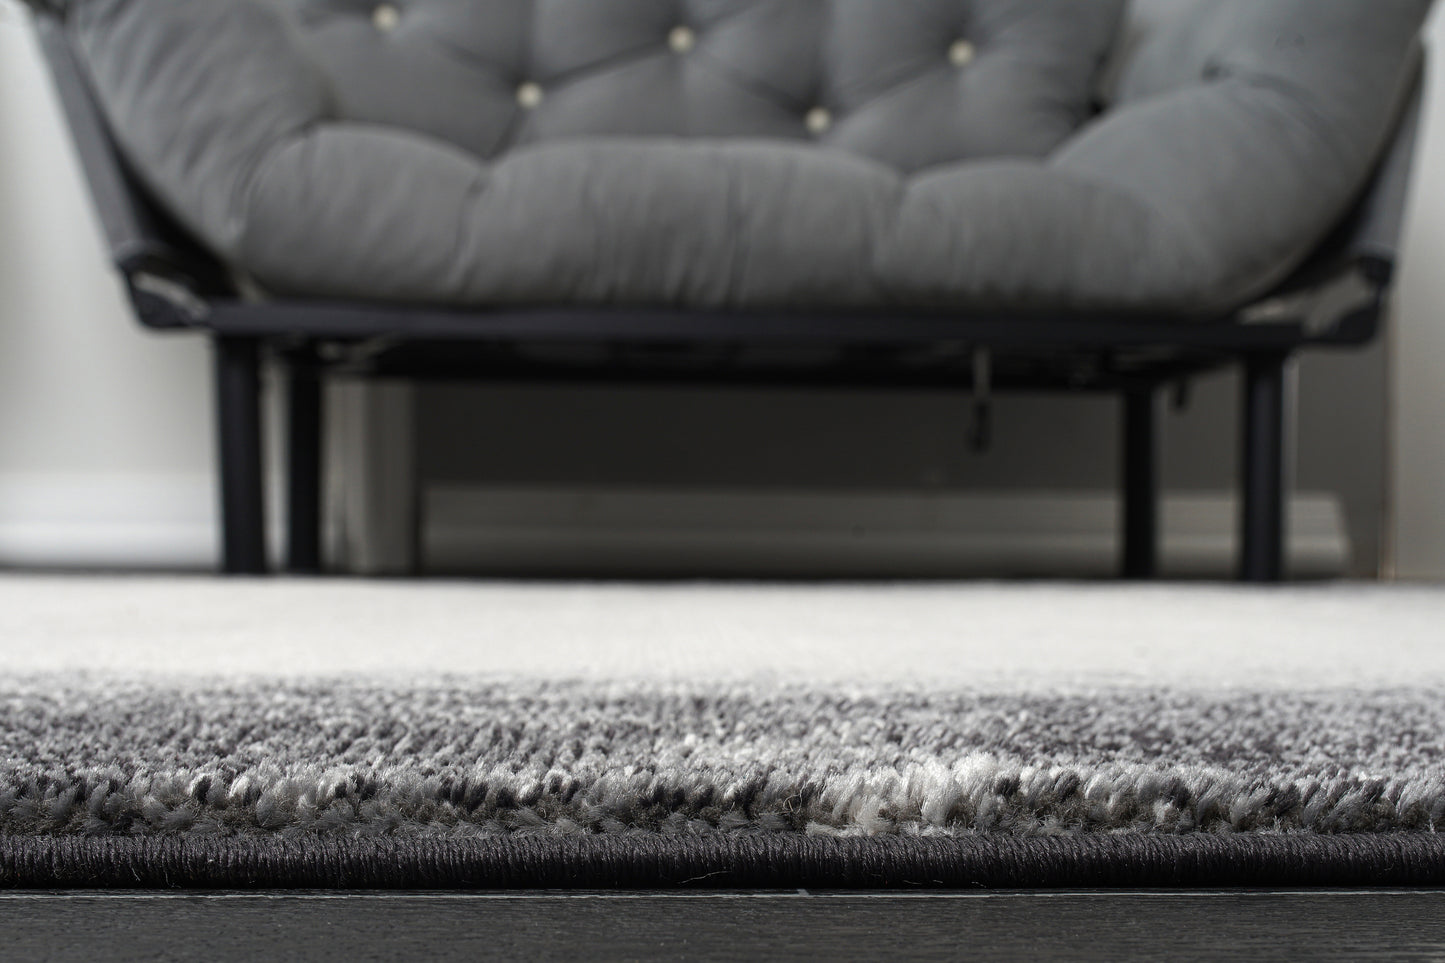 lucas dark light grey modern bordered plain solid color area rug 4x6, 4x5 ft Small Carpet, Home Office, Living Room, Bedroom